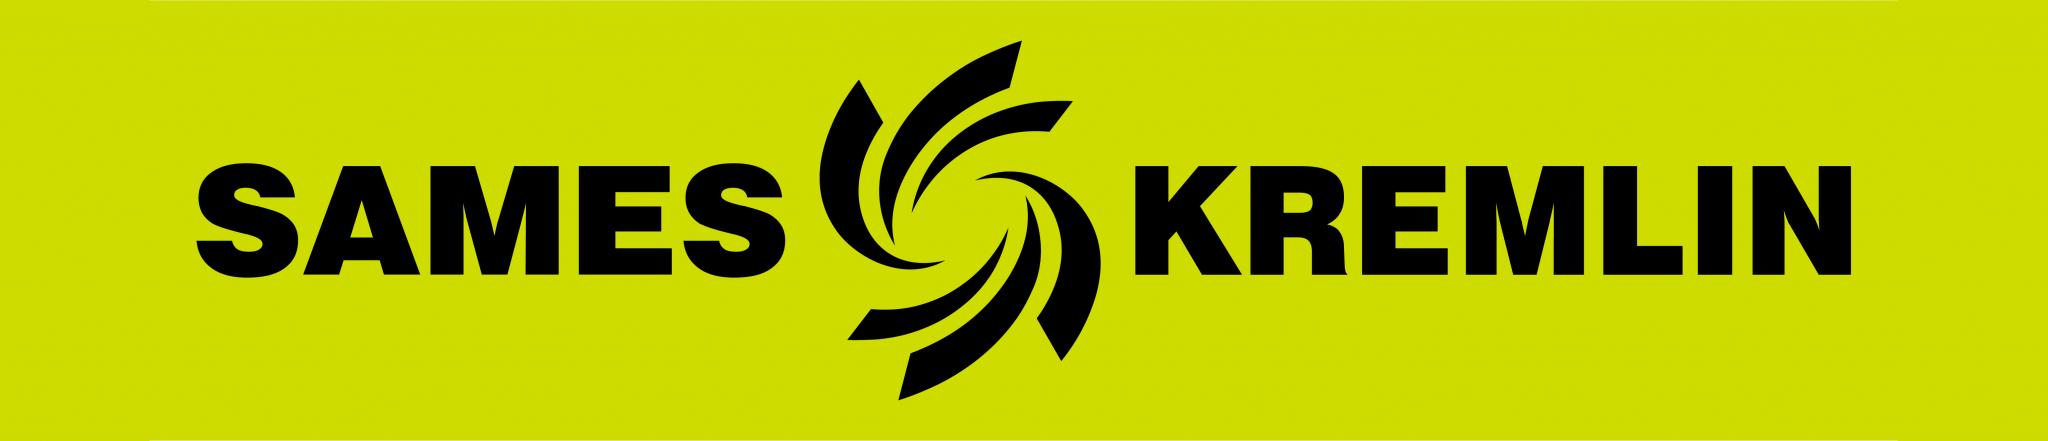 Logo_RVB_Black-on-Green_SAMES-KREMLIN